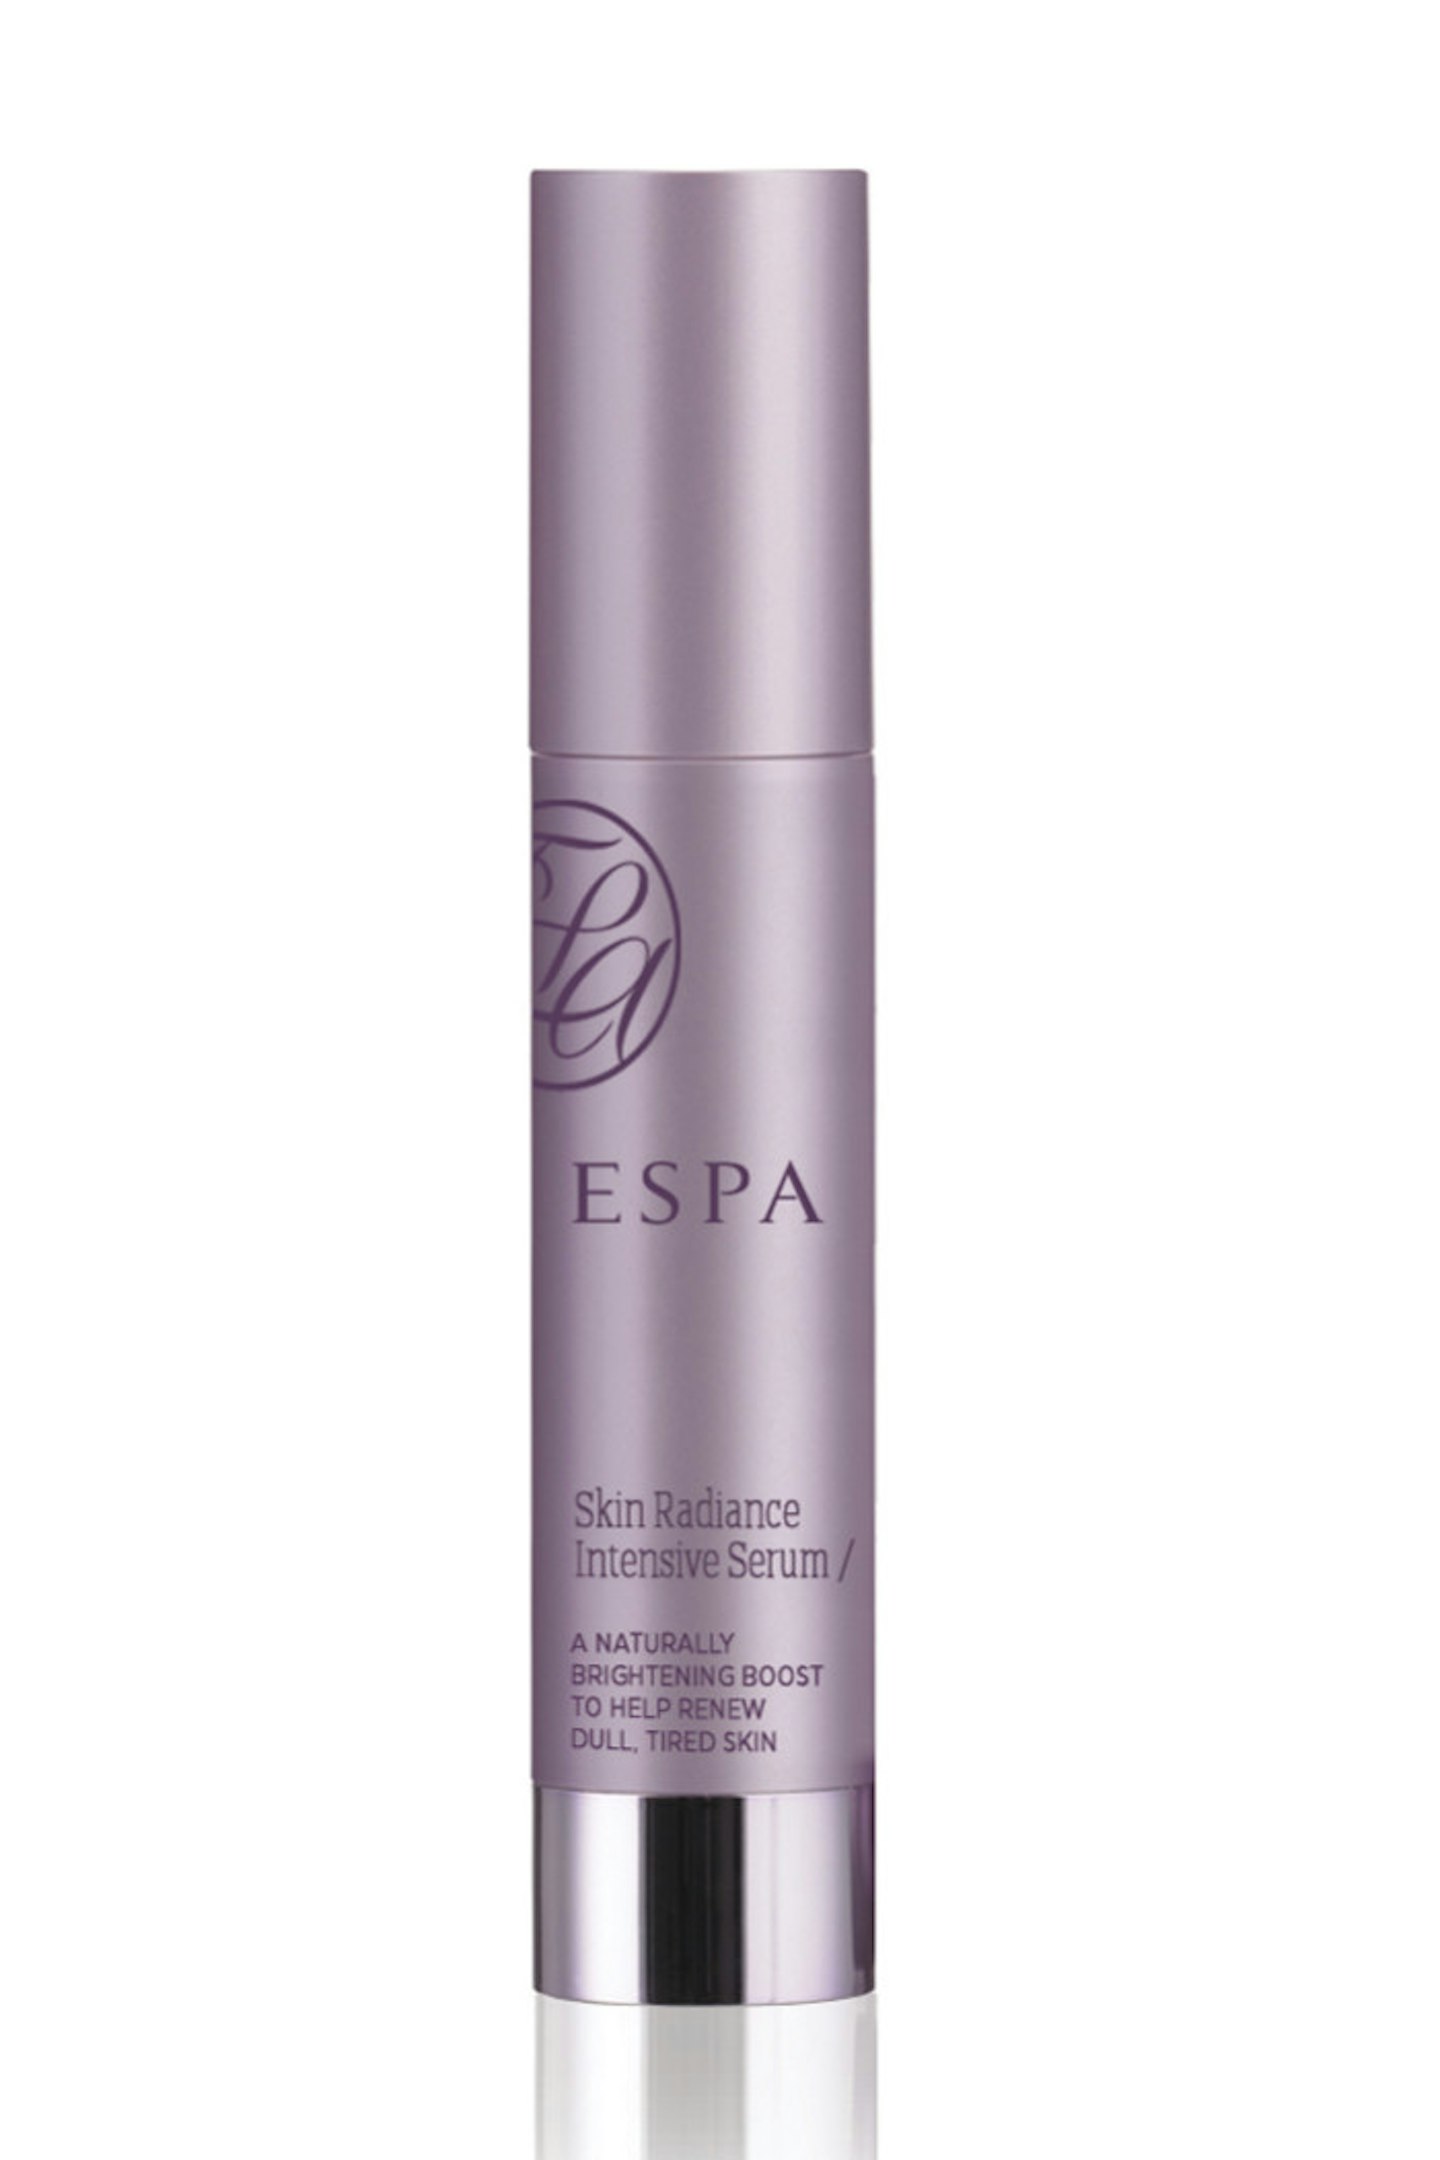 ESPA Skin Radiance Intensive Serum, £44, www.espaskincare.com